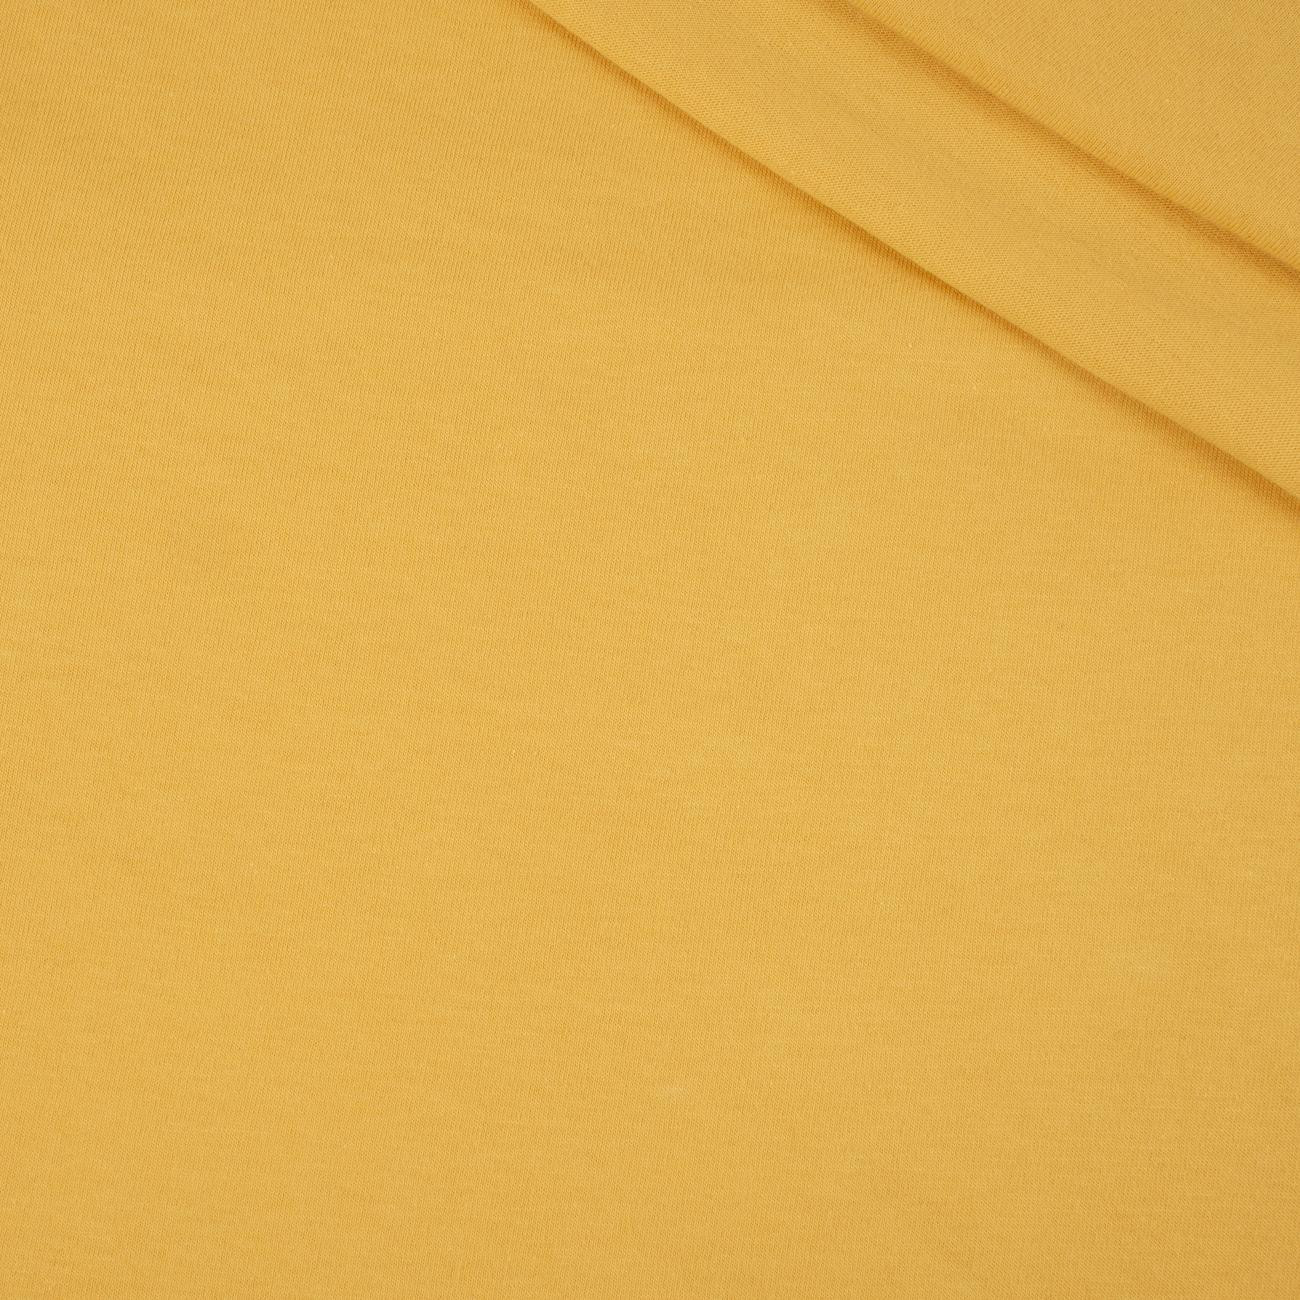 HONEY - T-shirt knit fabric 100% cotton T170